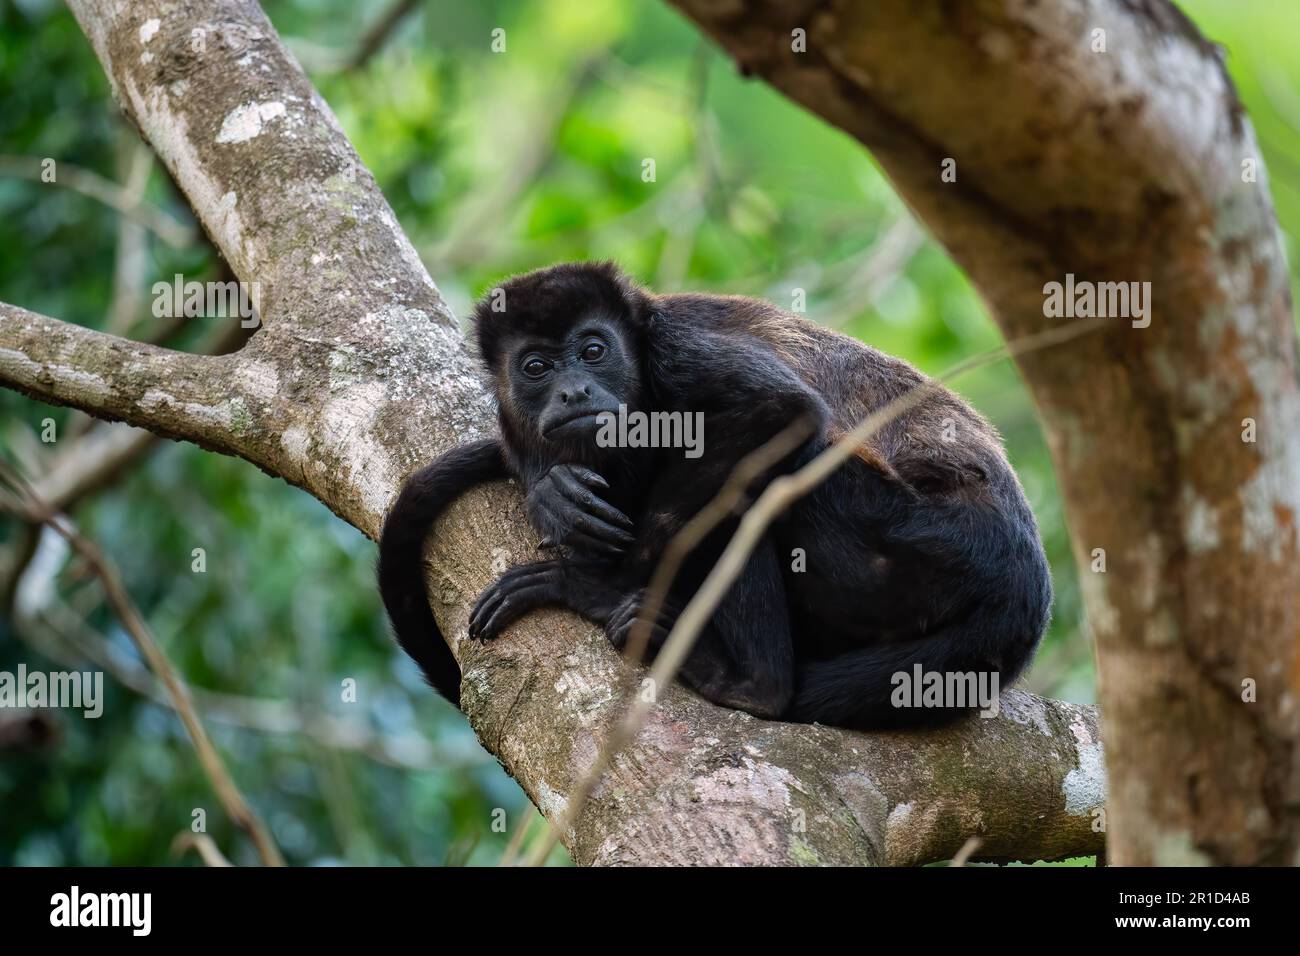 Mantled Howler Monkey - Alouatta palliata, beautiful noisy primate from Latin America forests and woodlands, Gamboa, Panama. Stock Photo